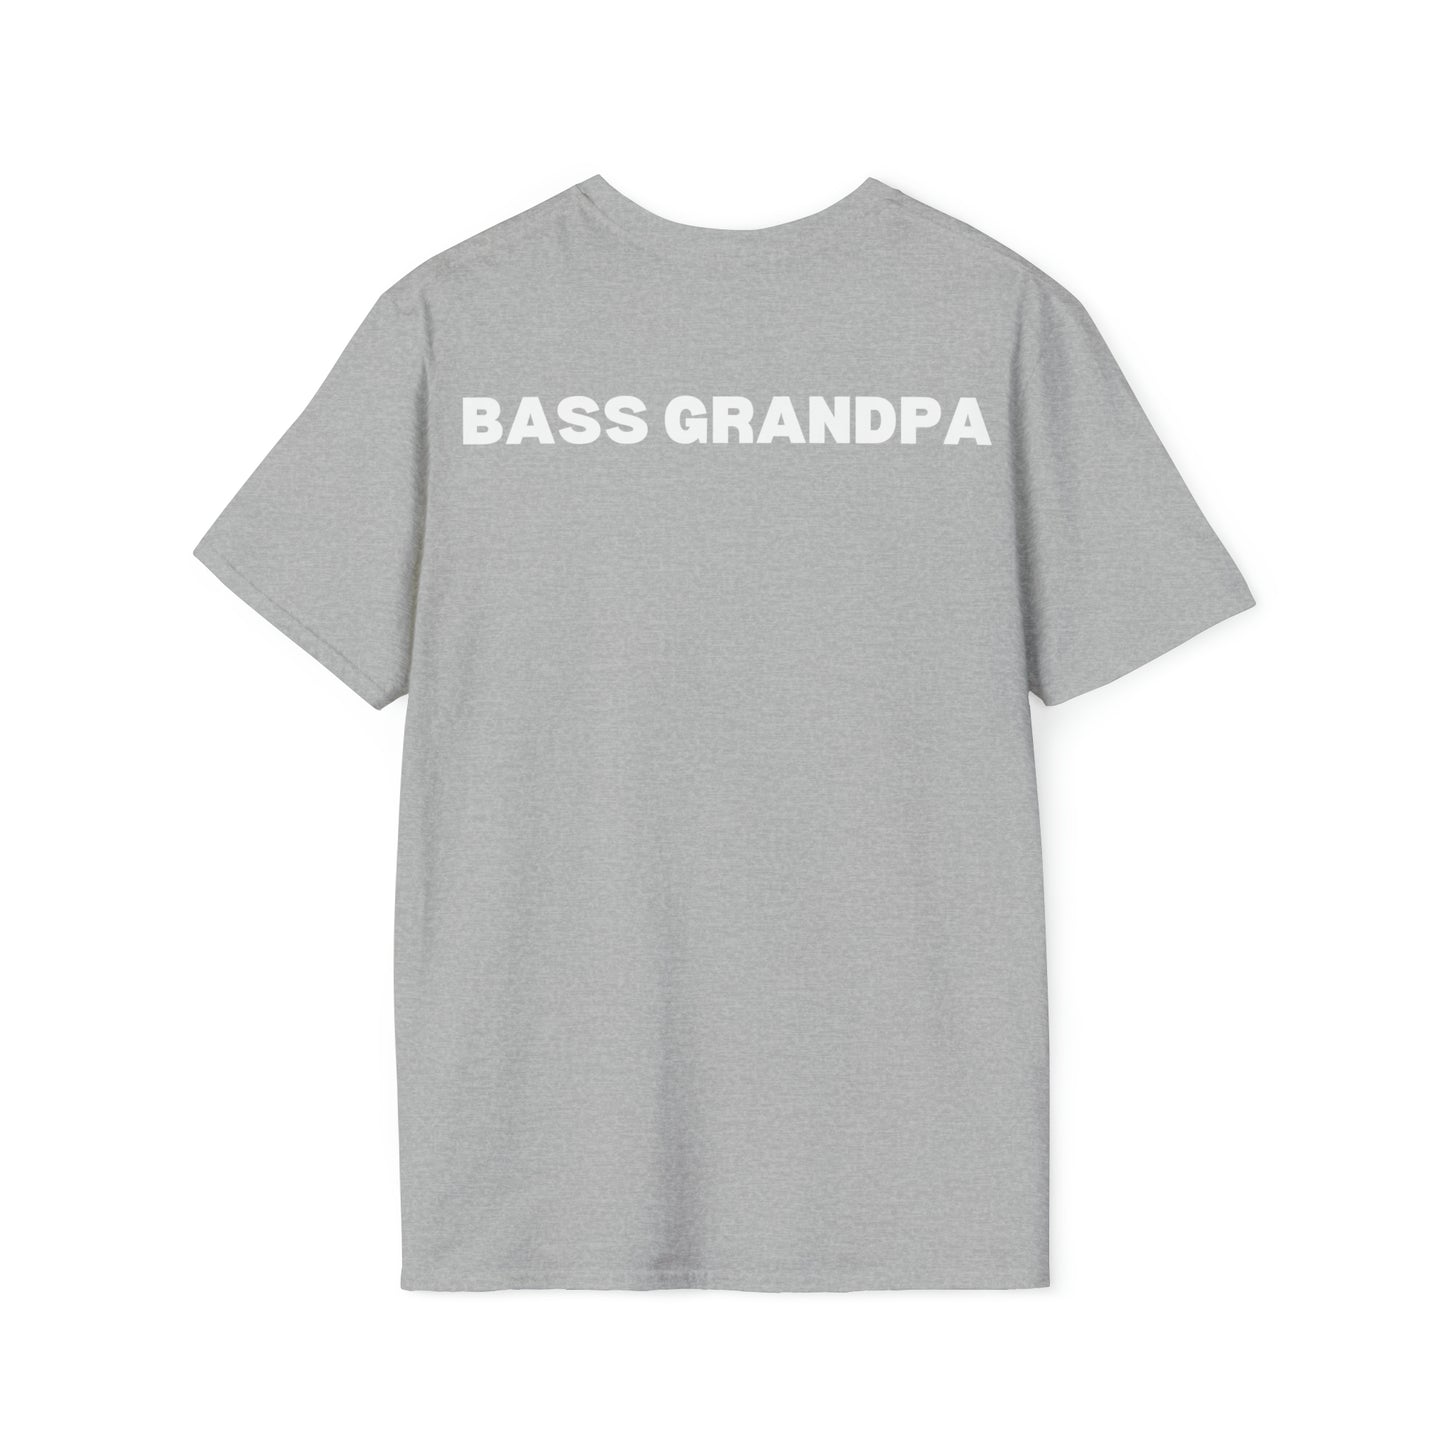 Junior Bassmaster Adult Tee - BASS GRANDPA - White Logo